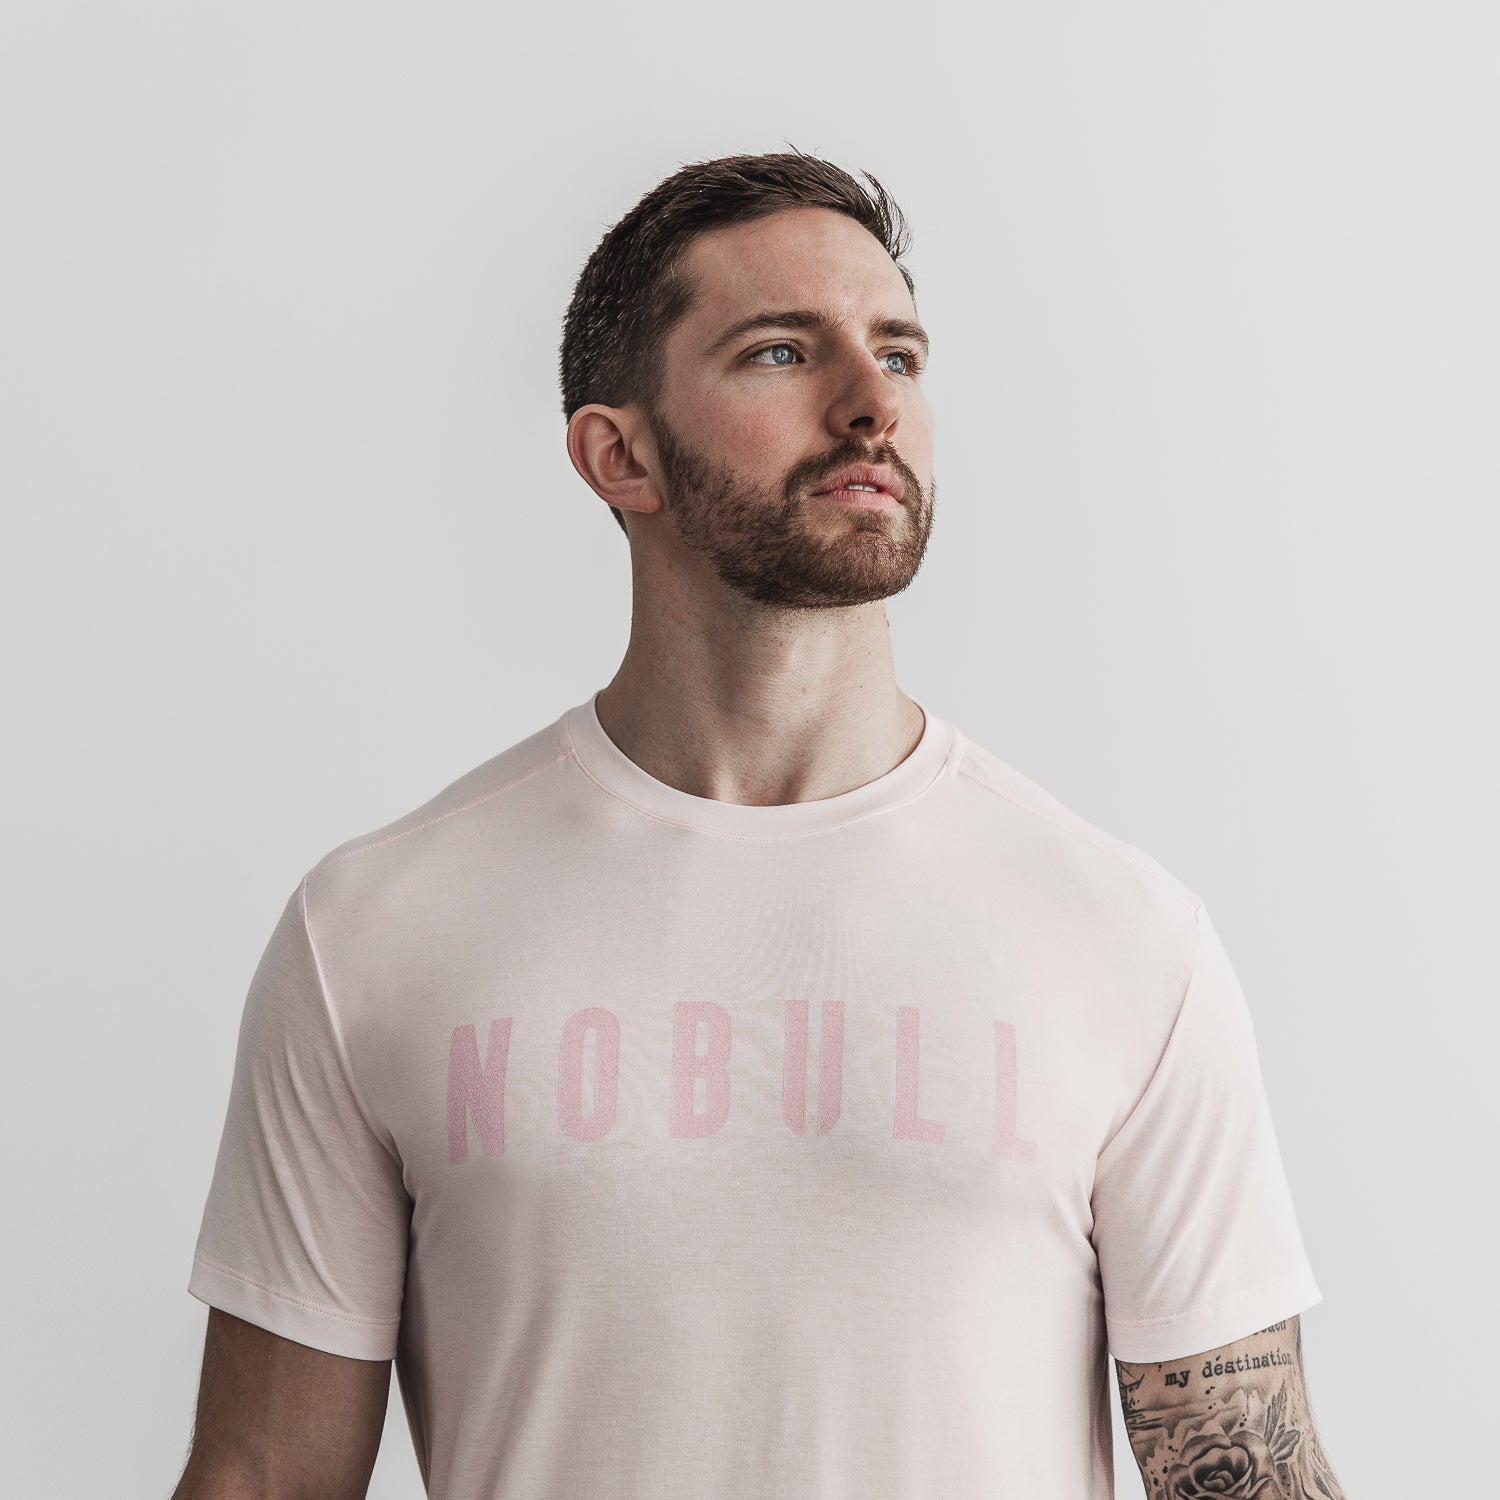 NOBULL - Men's Tee - Blush - Size XXXL